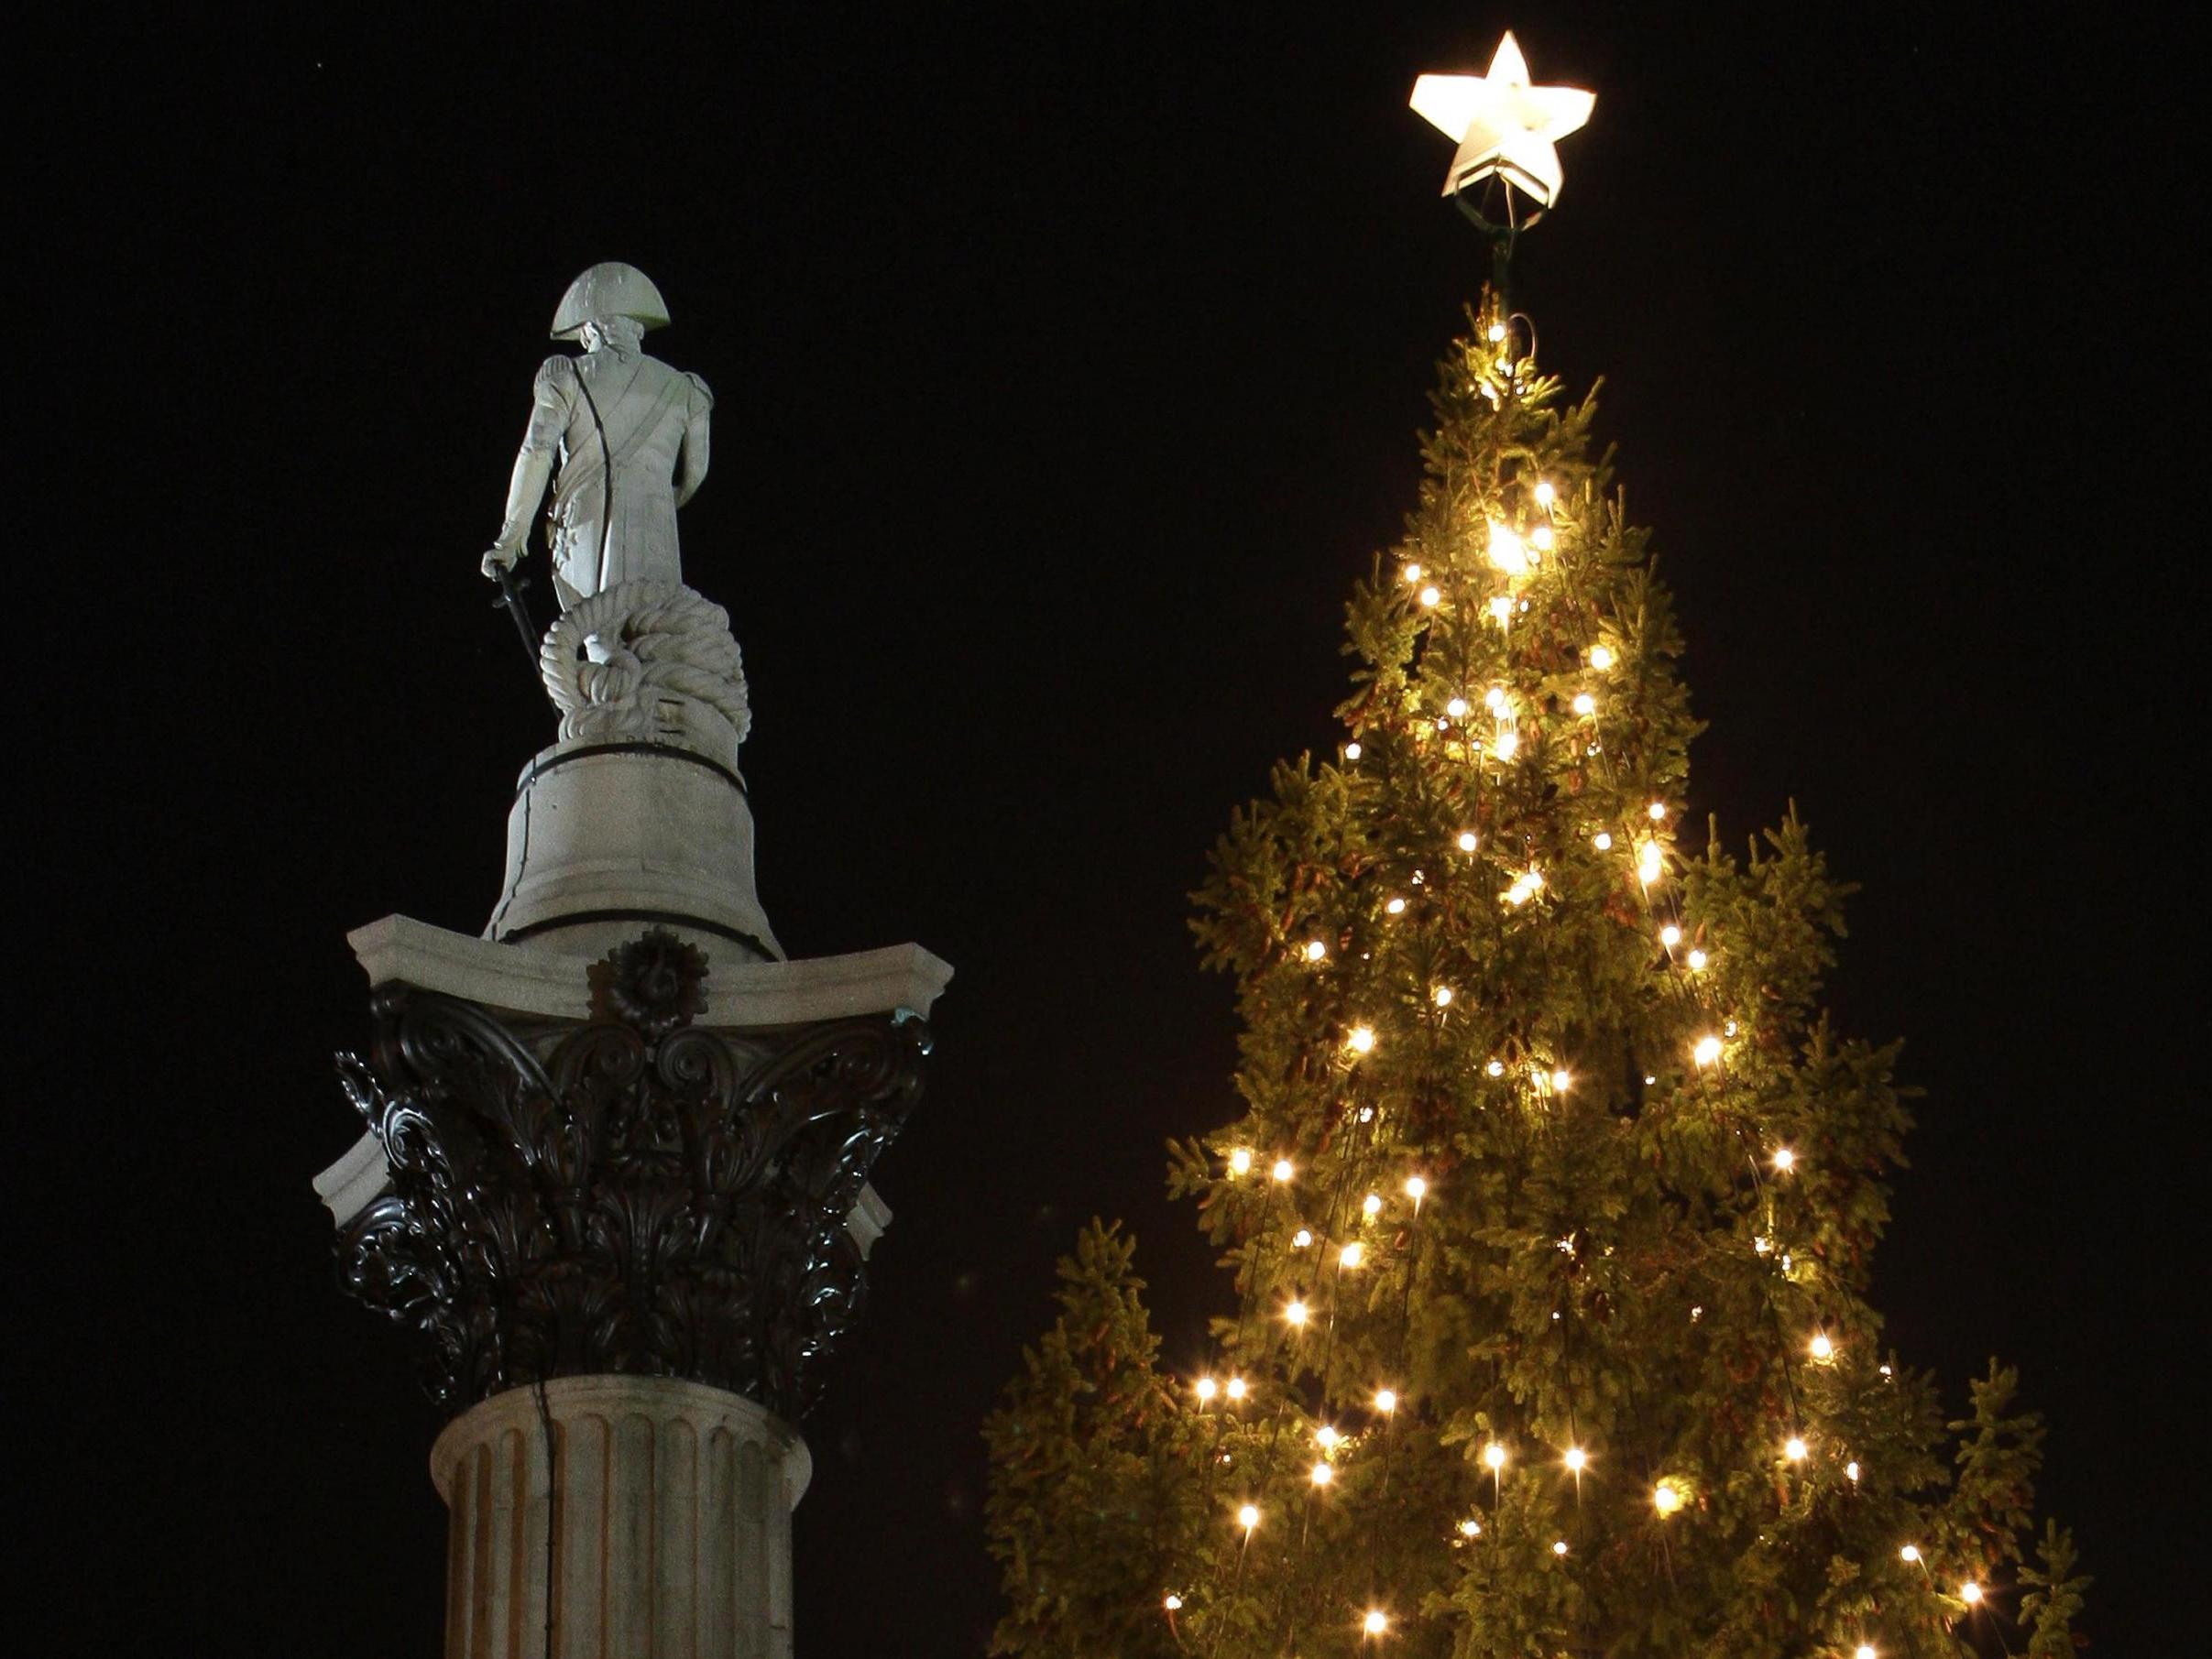 The Christmas Tree in Trafalgar Square, London